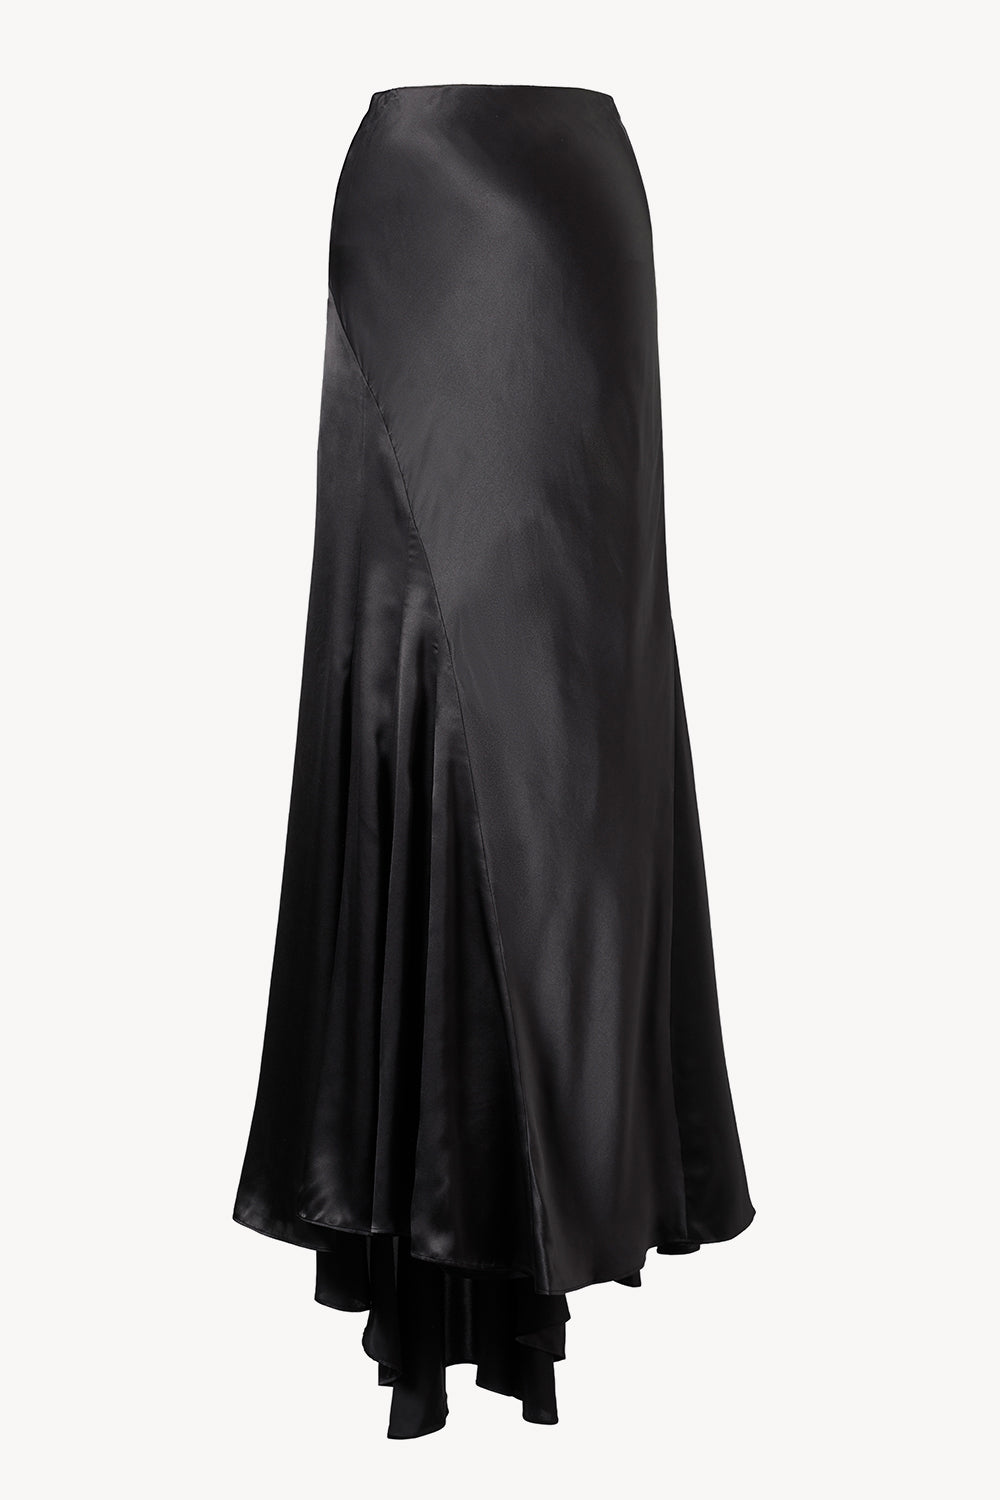 Jasmin Skirt Black · TOVE Studio · Advanced Contemporary Womenswear Brand